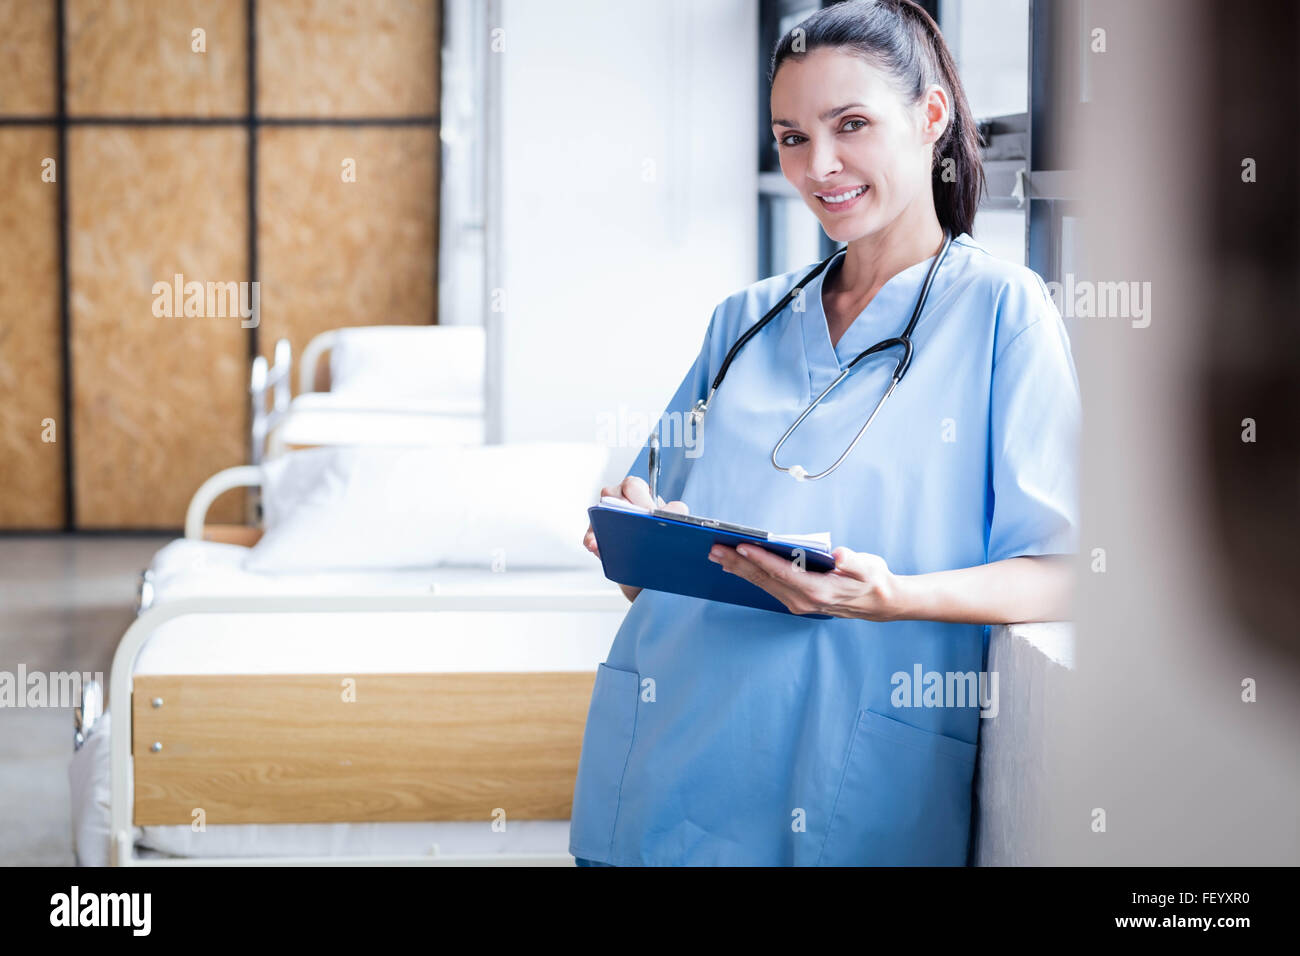 Nurse writing on a clipboard Stock Photo